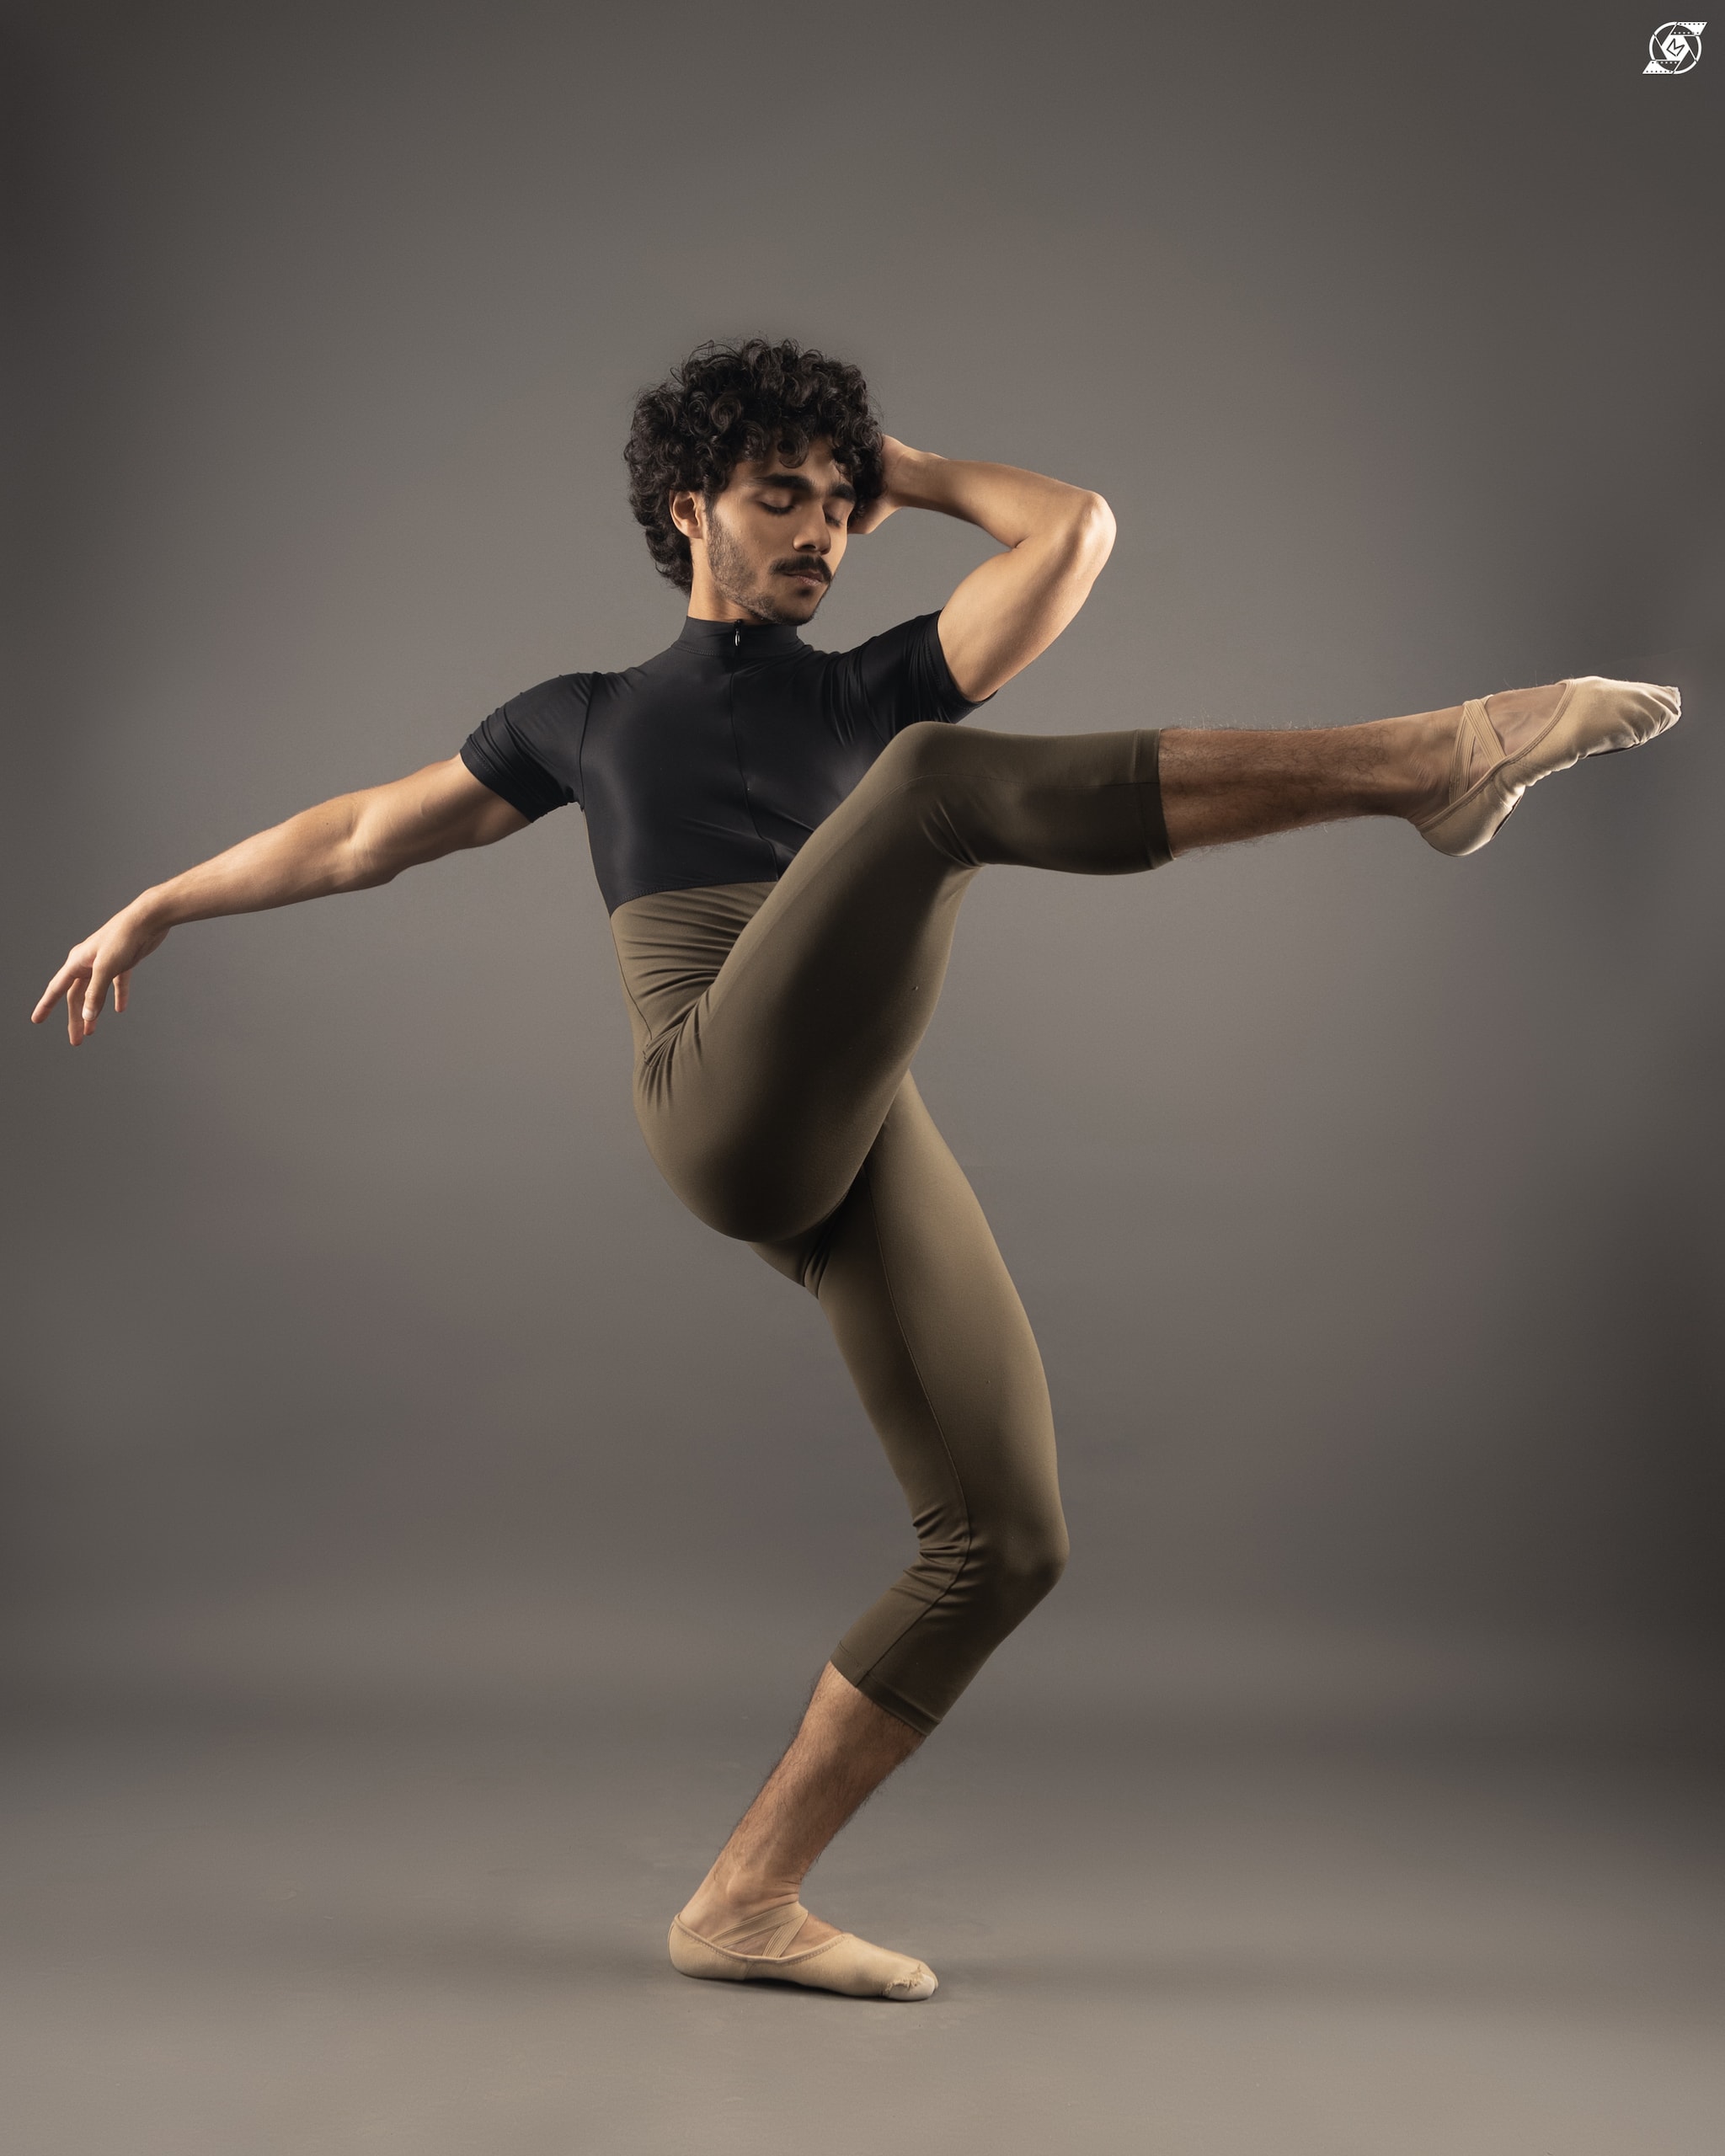 classical ballet calf length unitard with short sleeves for men PDAbiketard  1 - PDA Professional Dance Attire